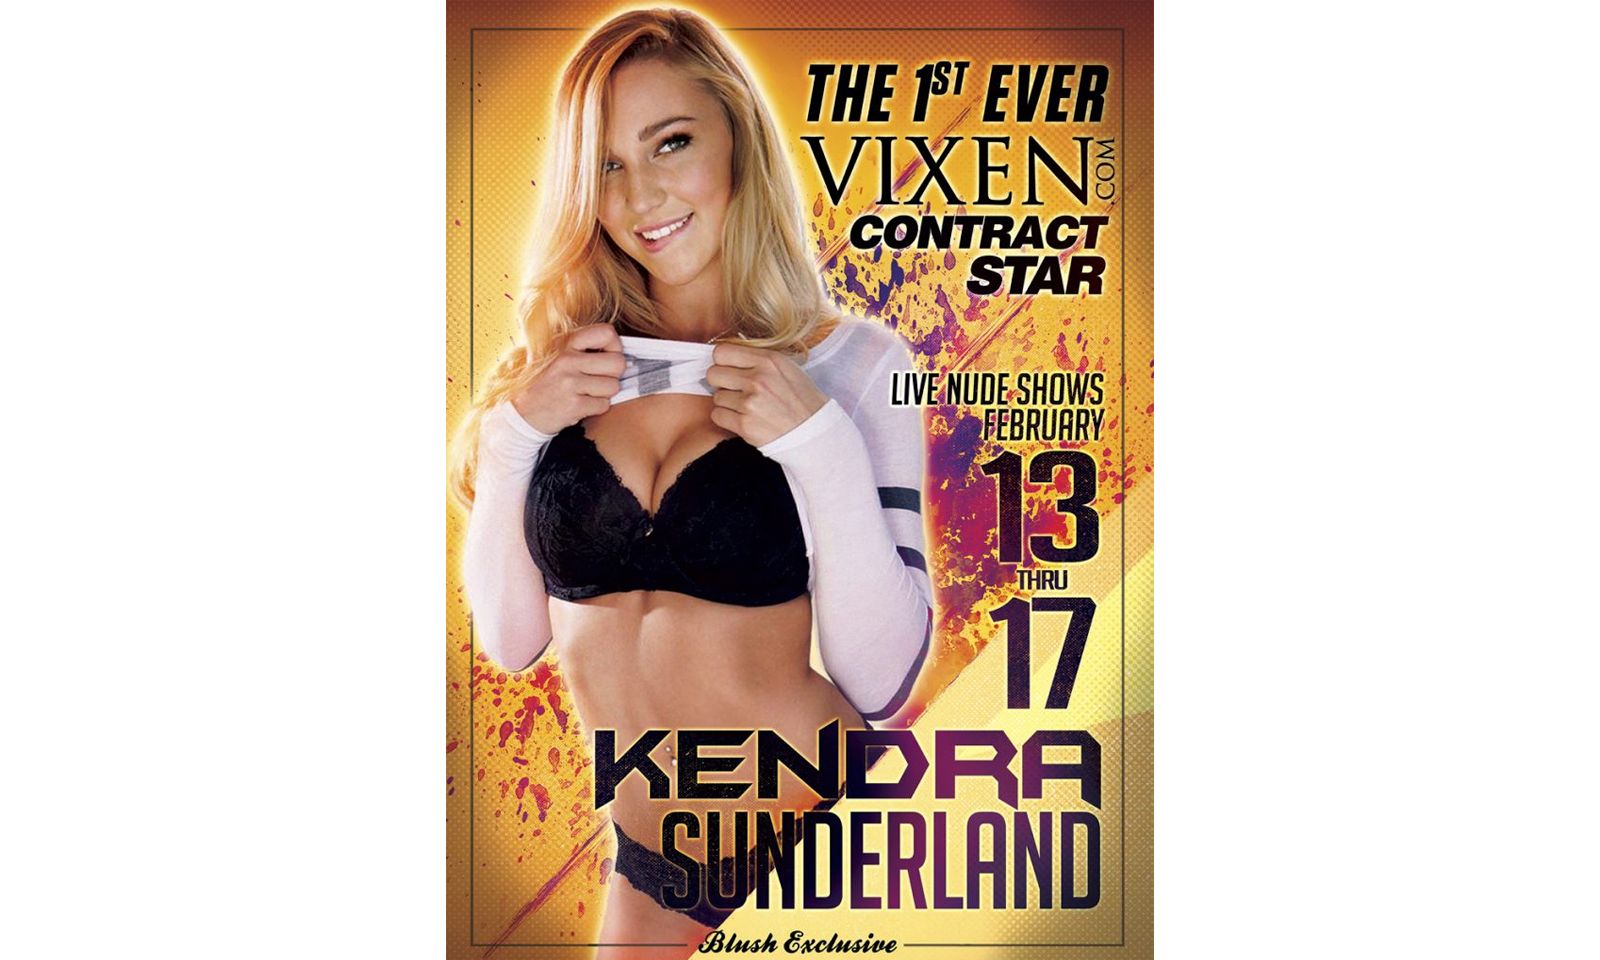 Kendra Sunderland Dancing ar at Pittsburgh's Blush Exotic